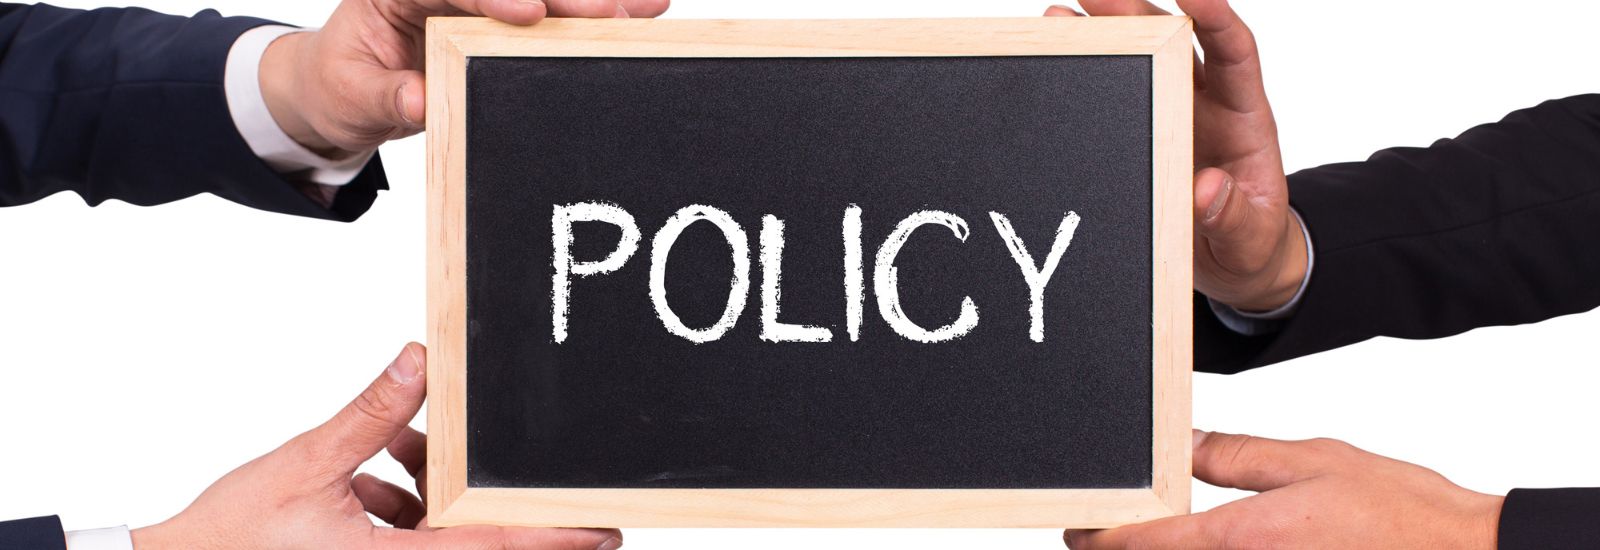 Policy in black board